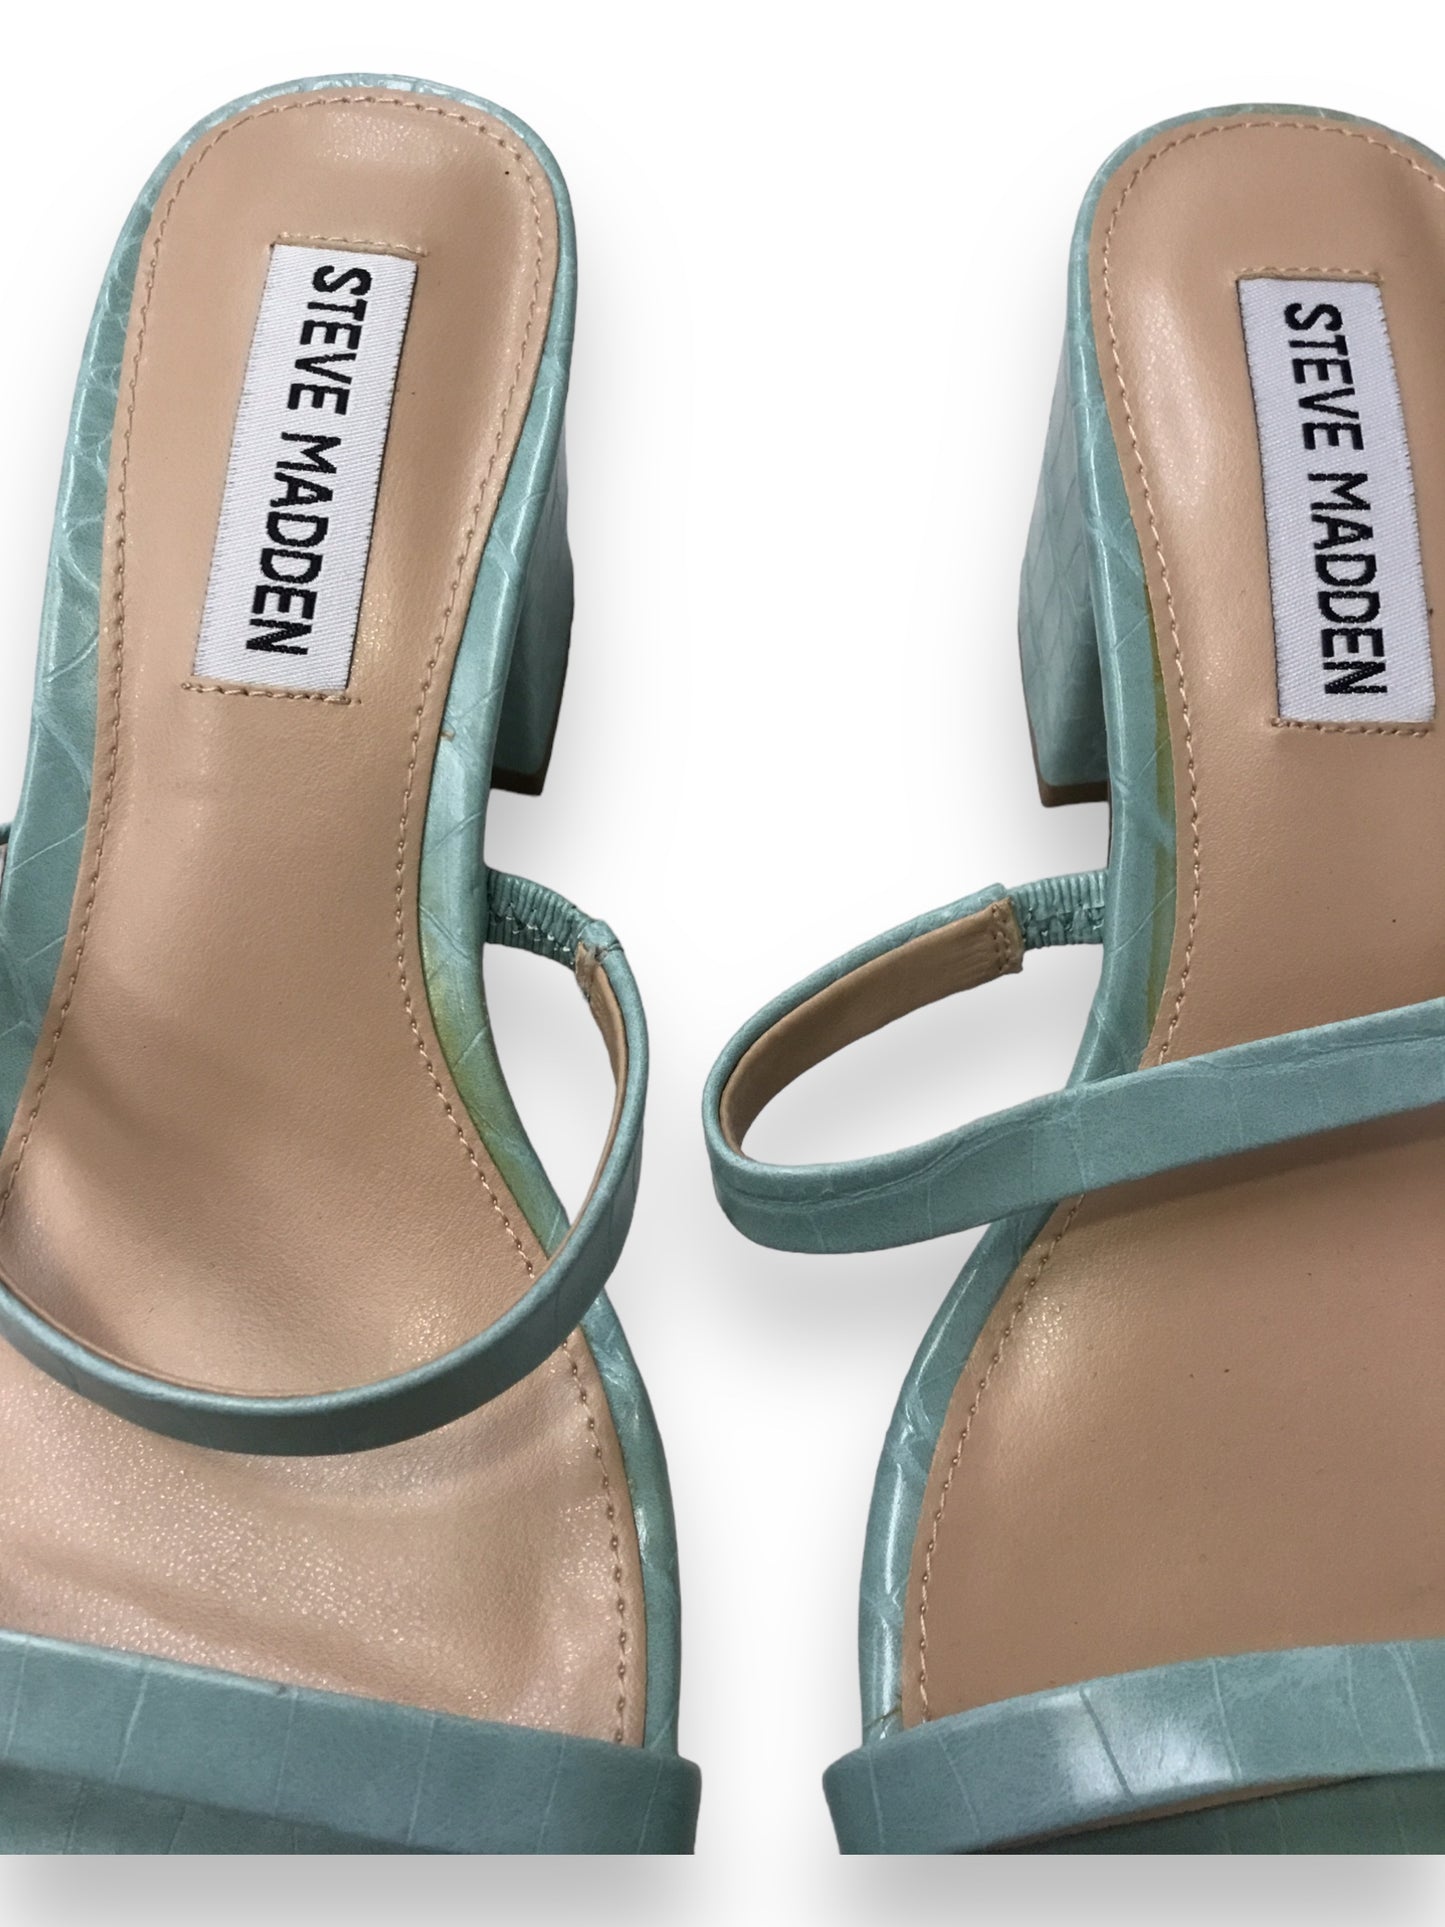 Sandals Heels Block By Steve Madden  Size: 6.5